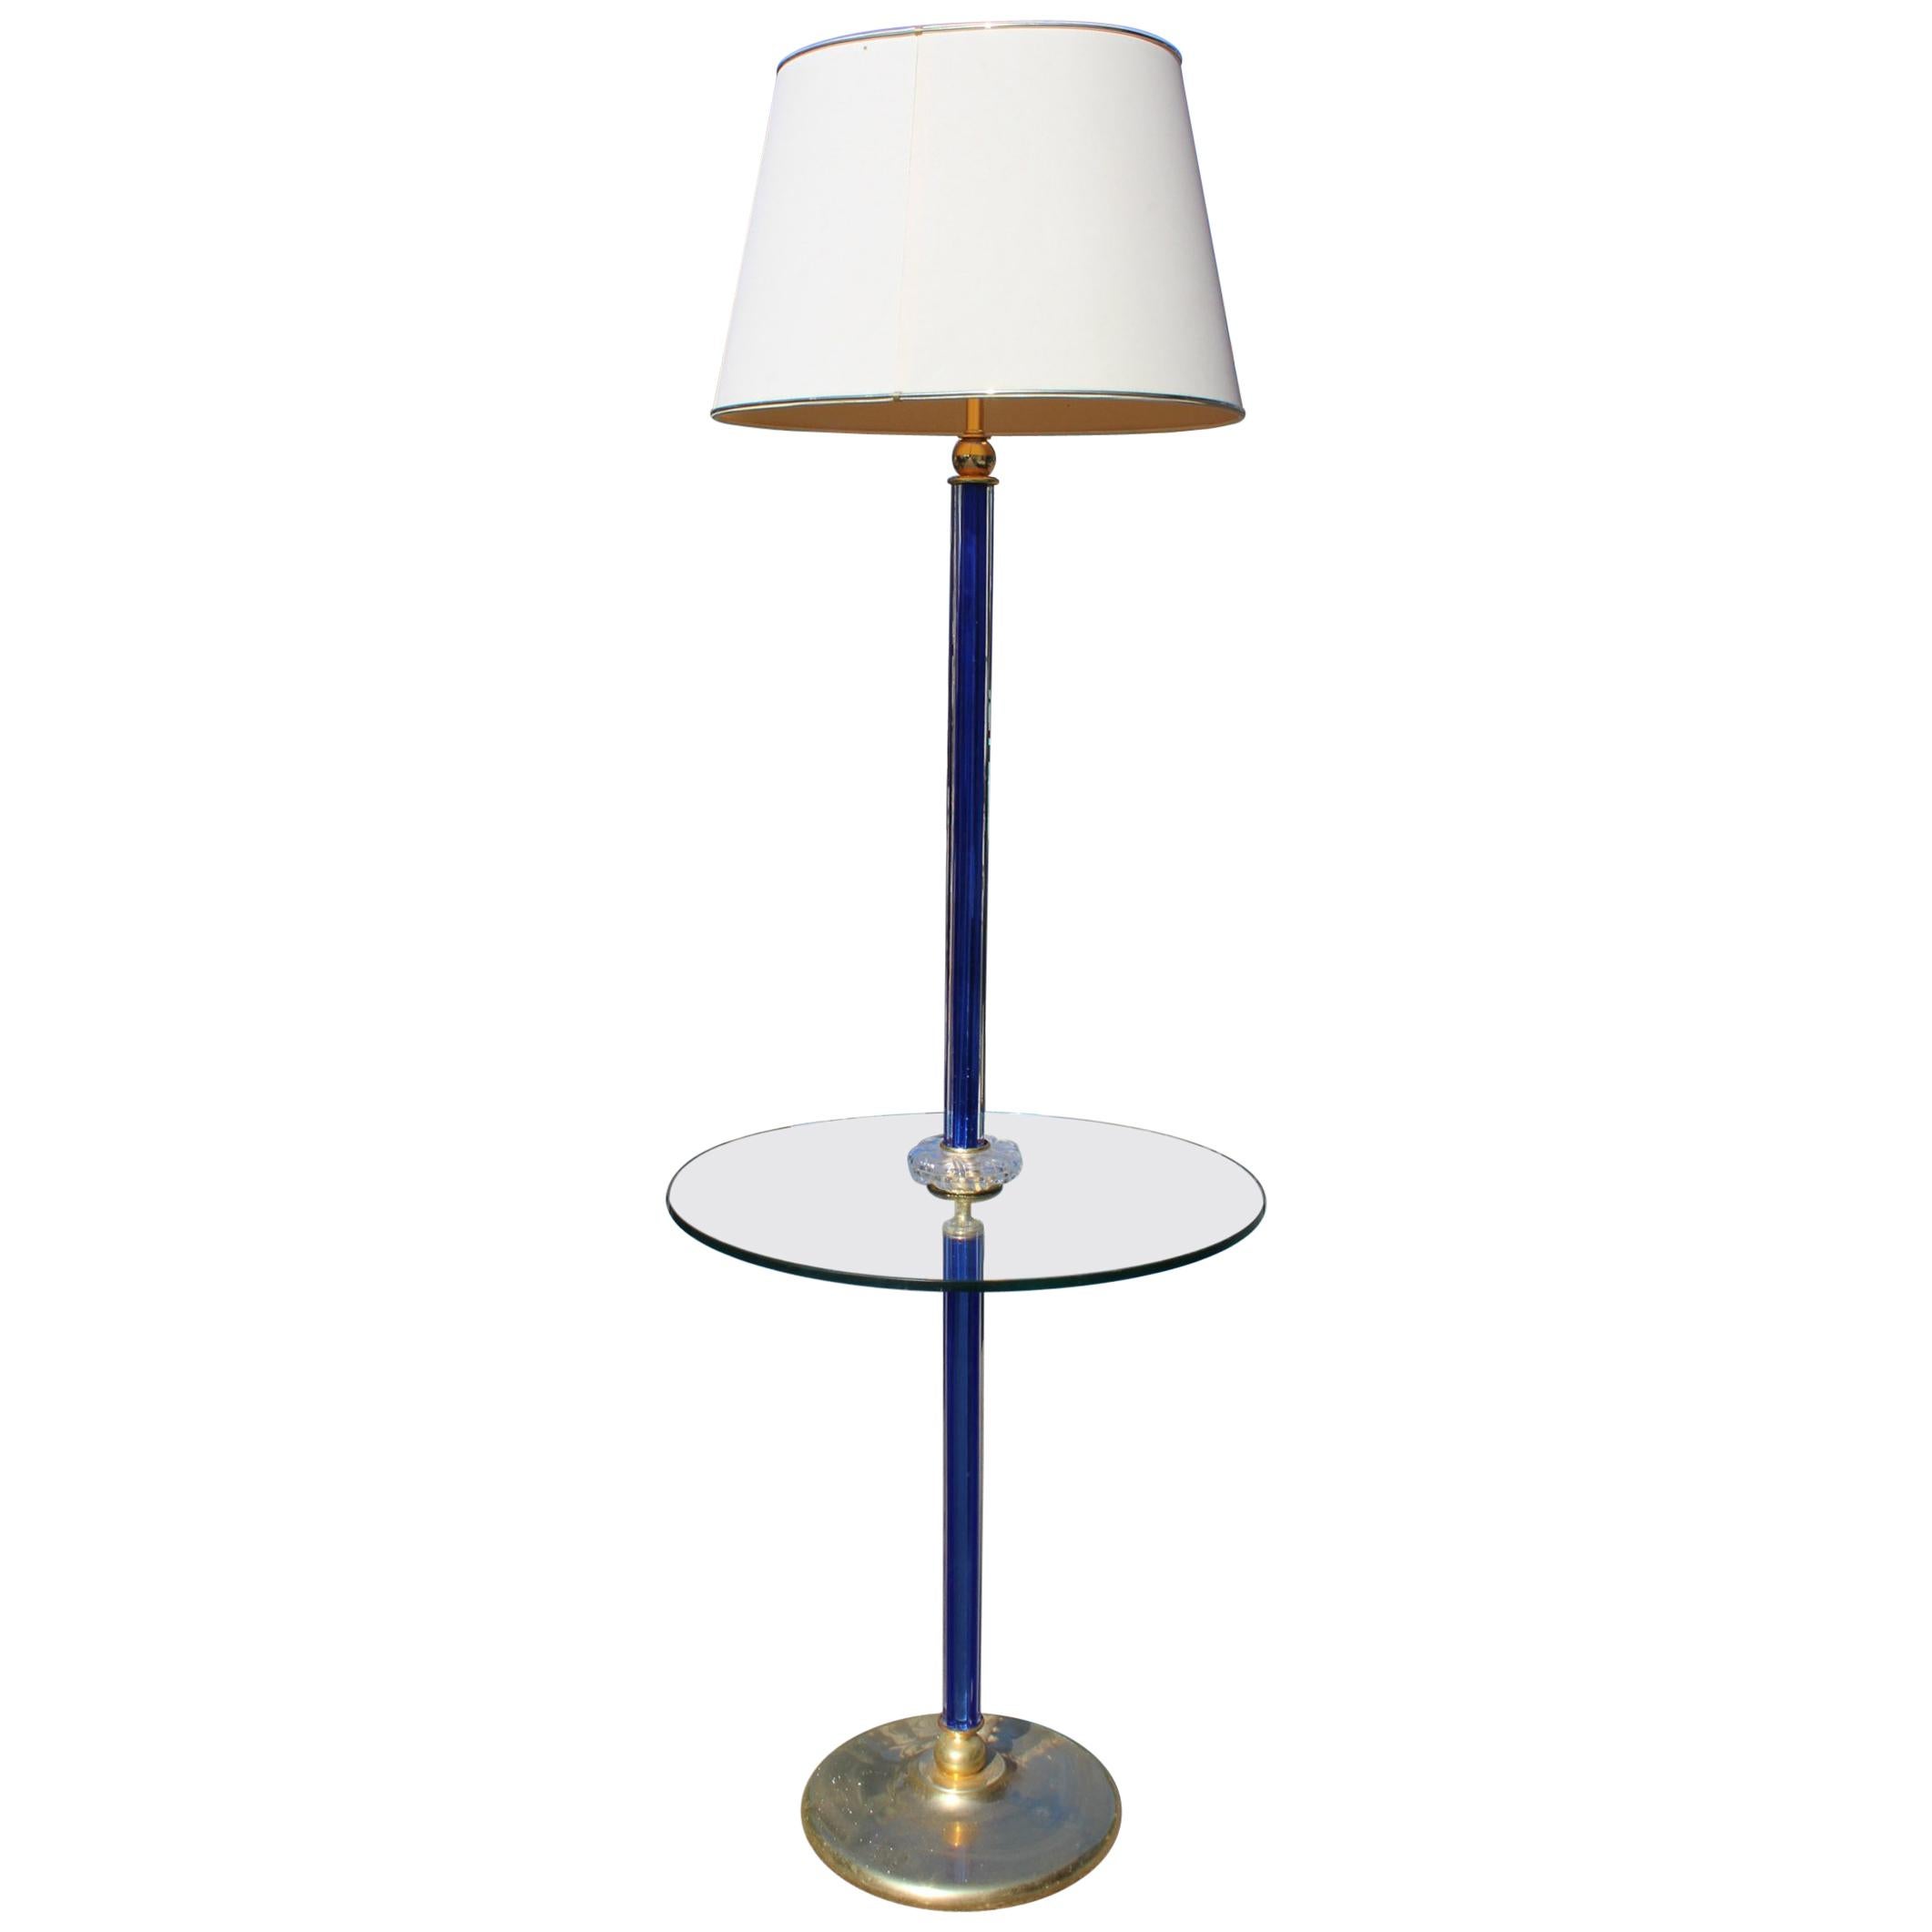 1970s Italian Floor Lamp with Brass and Venetian Murano Glass Fittings